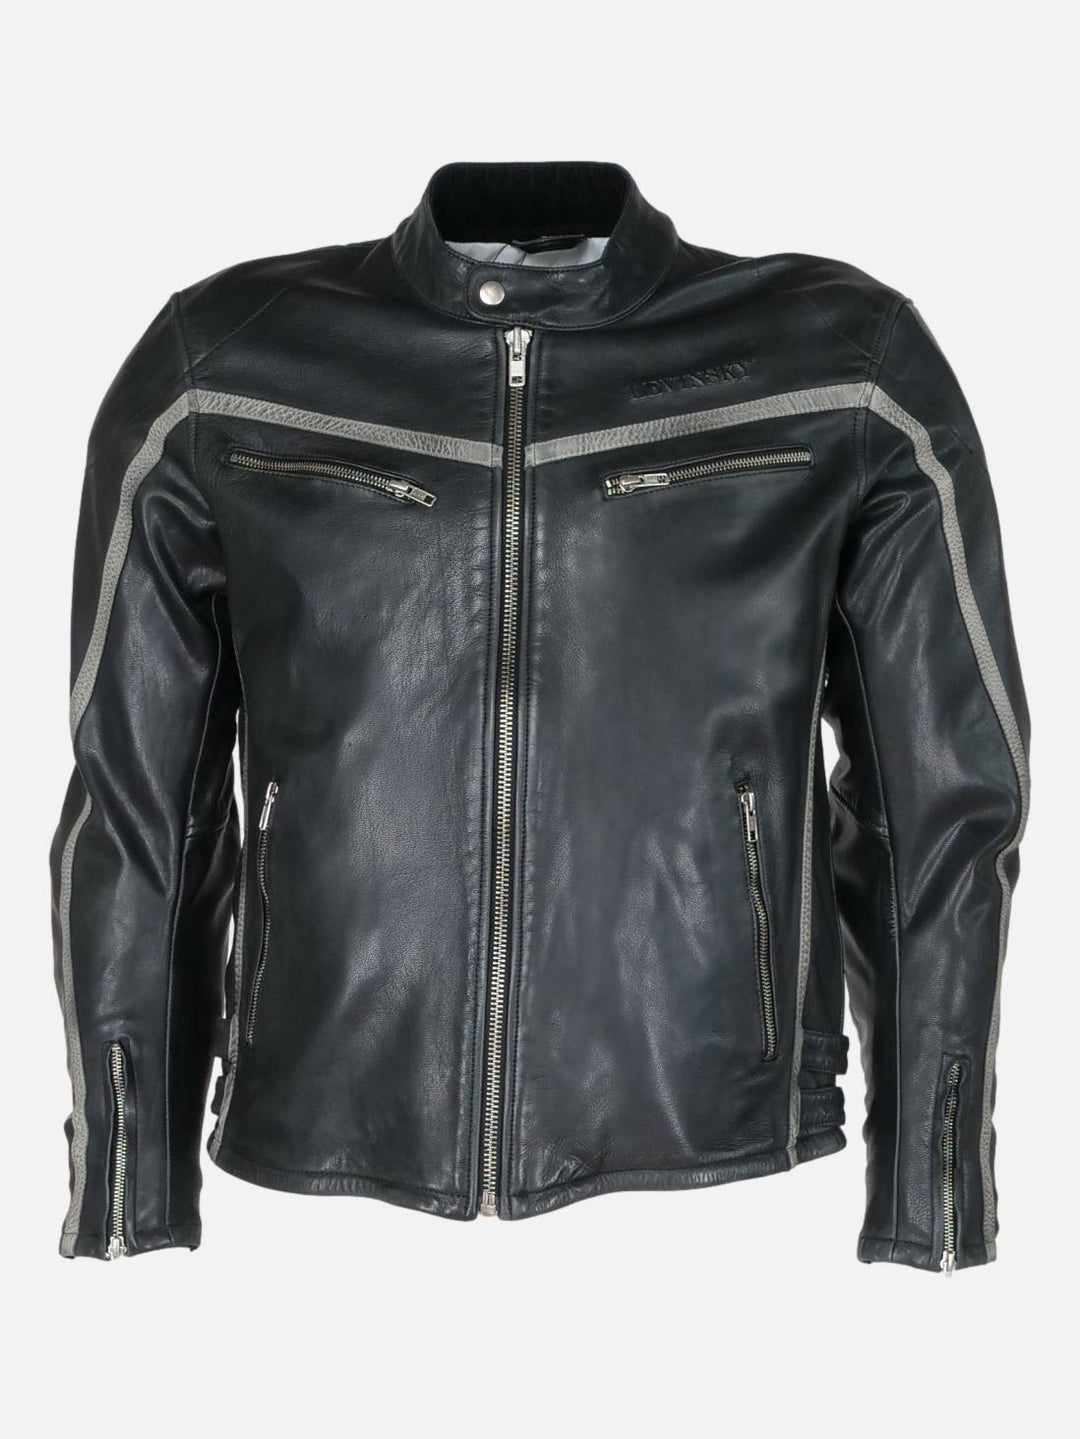 GMCJ M-002 Mens Motor Cycle Jacket - Goat Nappa Retro Leather - Man - Black